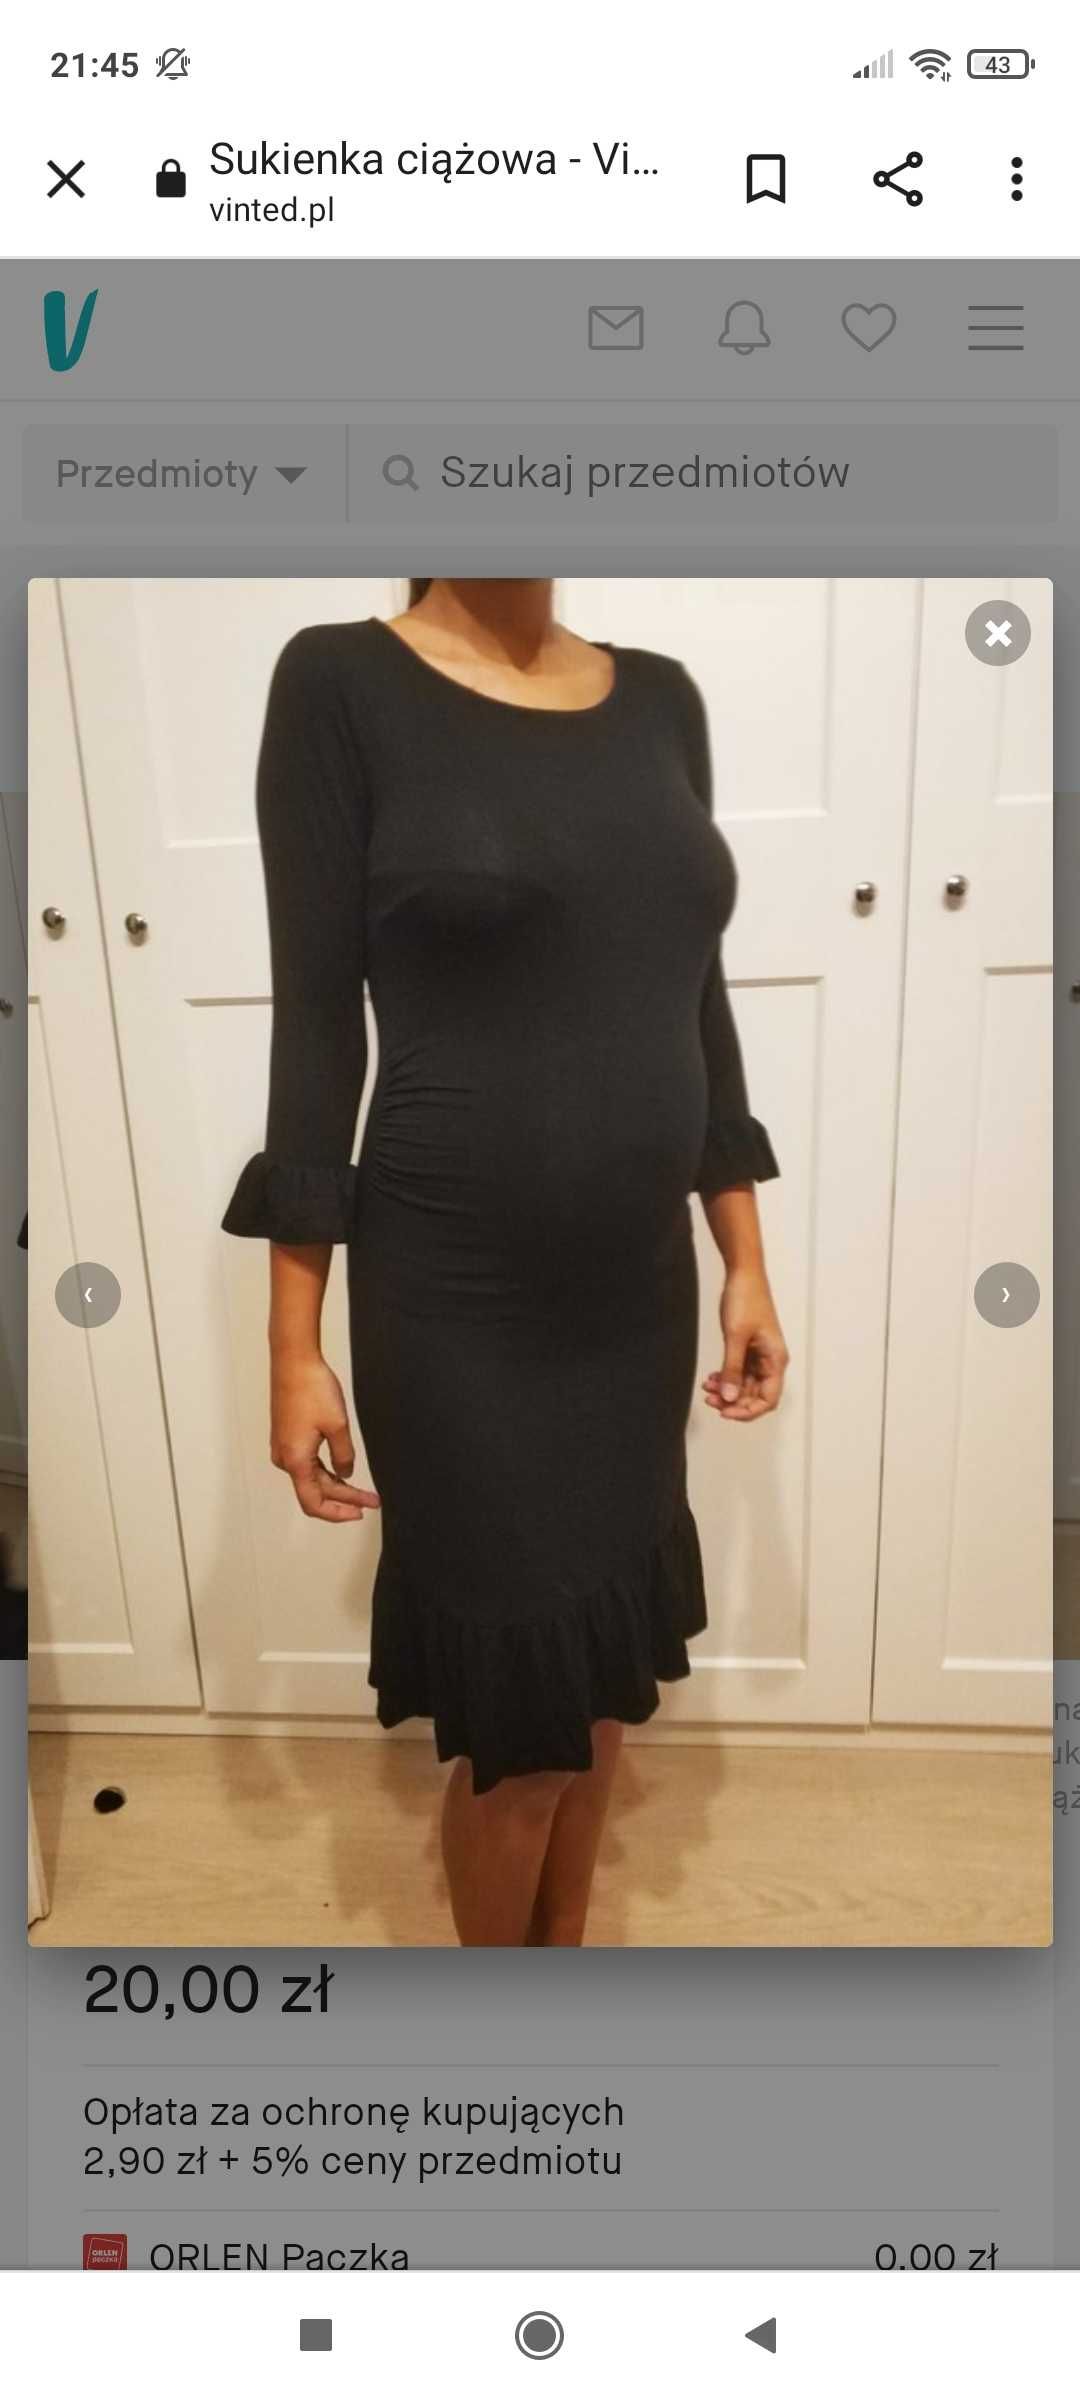 Elegancka sukienka ciążowa na święta